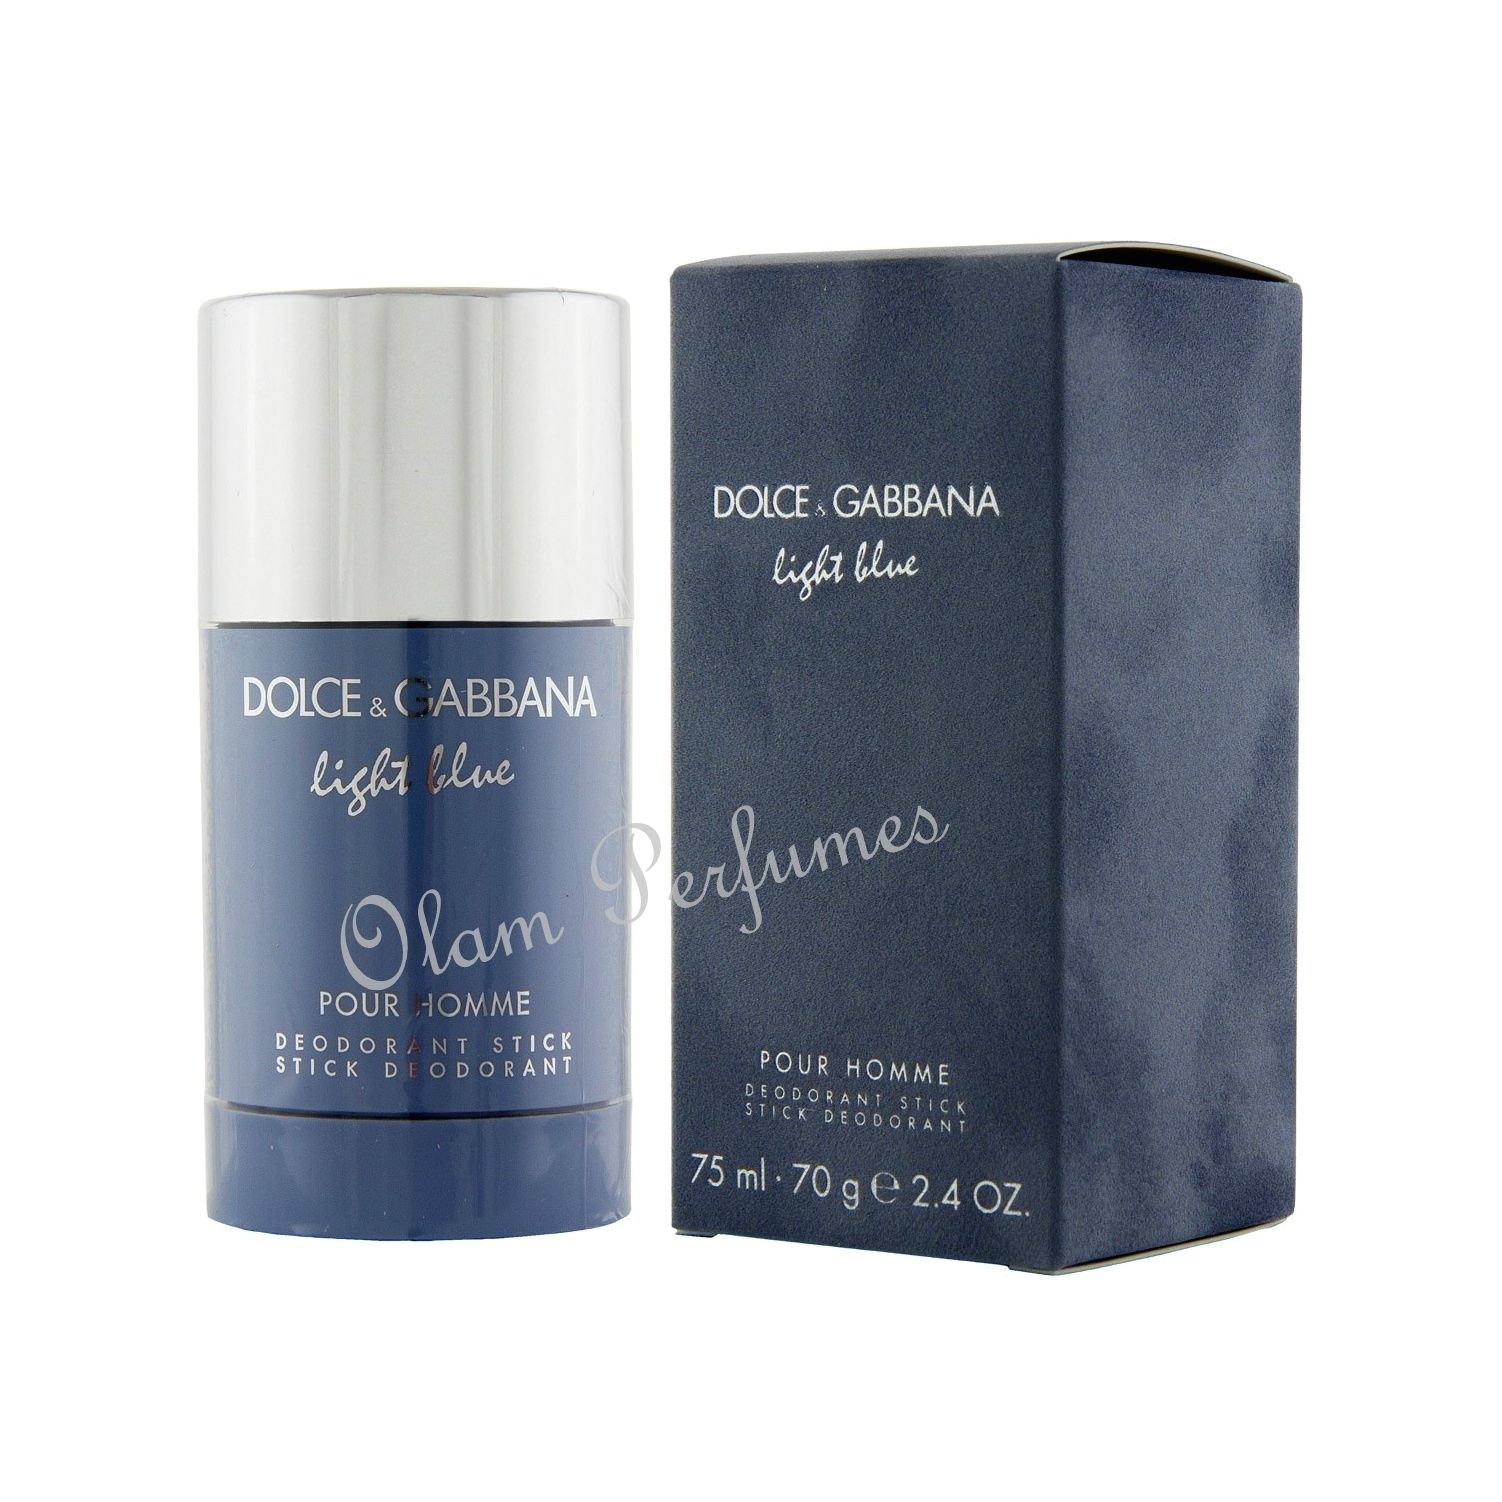 Dolce Gabbana Light Blue Deodorant Stick. Дезодорант-стик Light Blue pour homme. Dolce Gabbana Light Blue pour homme Deodorant Stick. Dolce & Gabbana дезодорант-стик Dolce & Gabbana Light Blue.